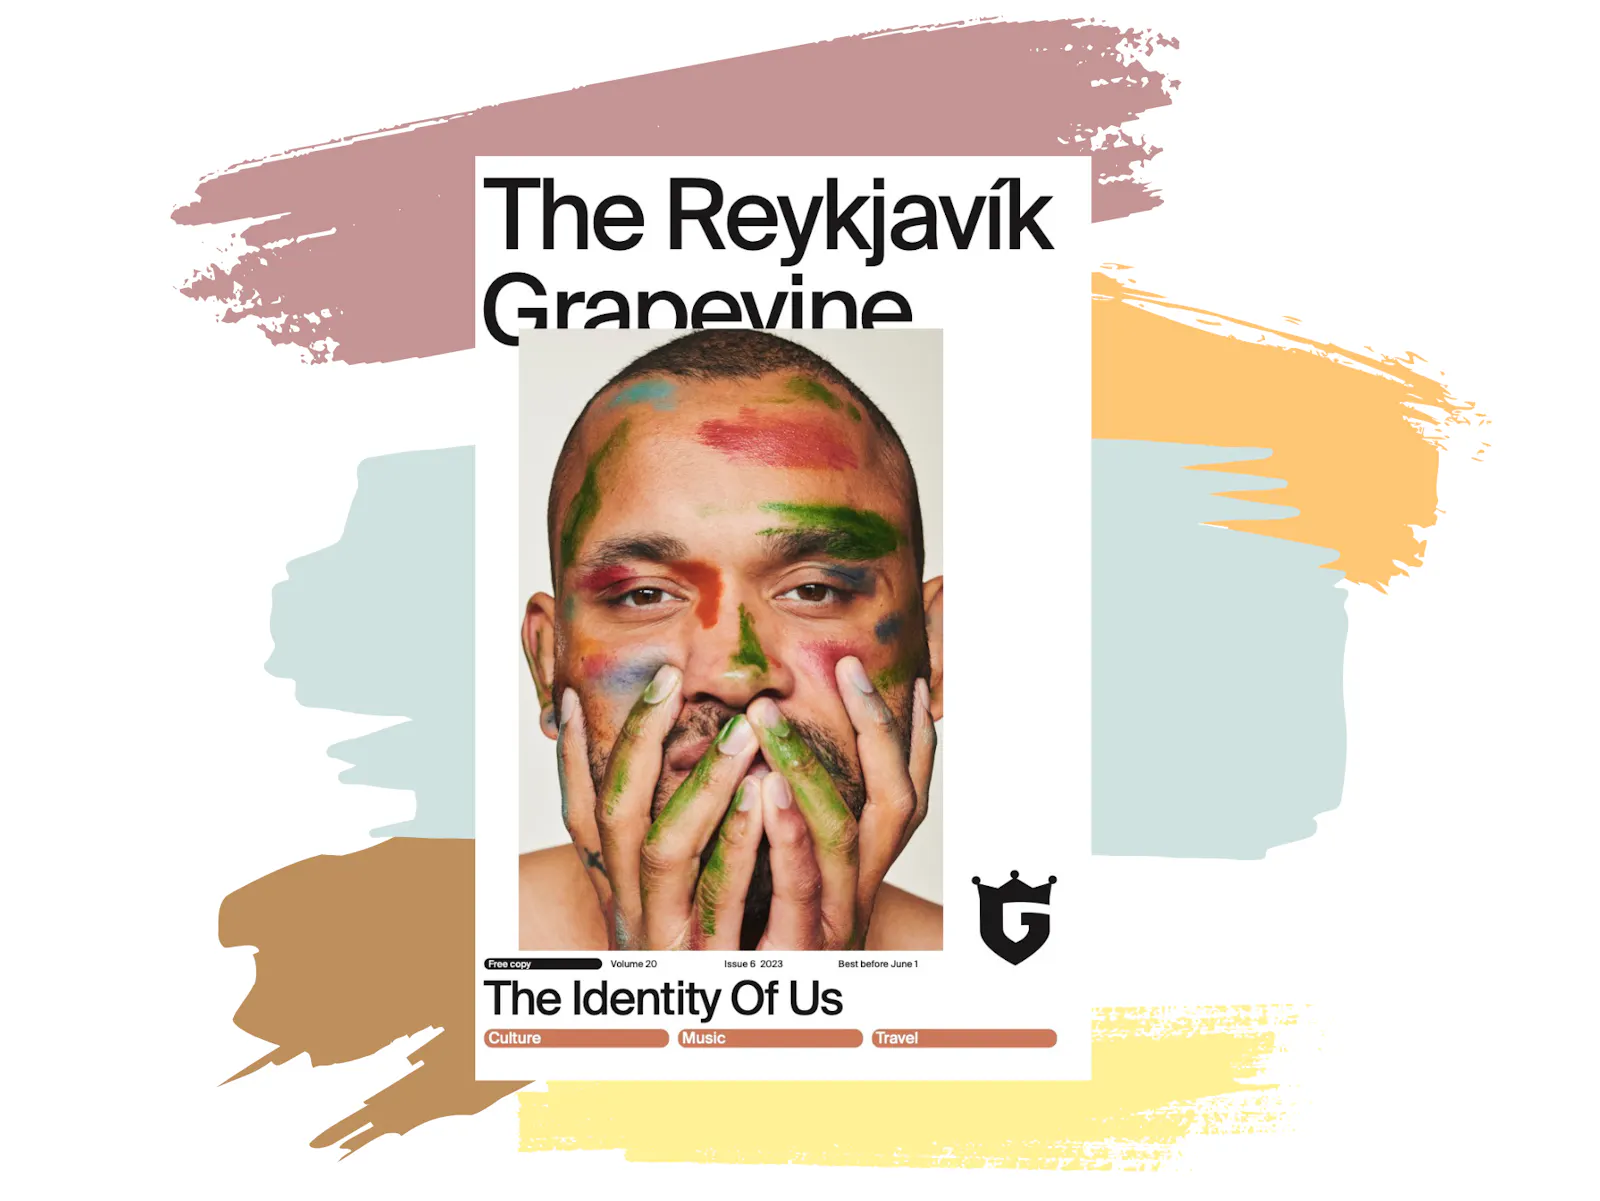 David Thor Katrinarson on the cover of the Reykjavík Grapevine, Volume 20, Issue 6